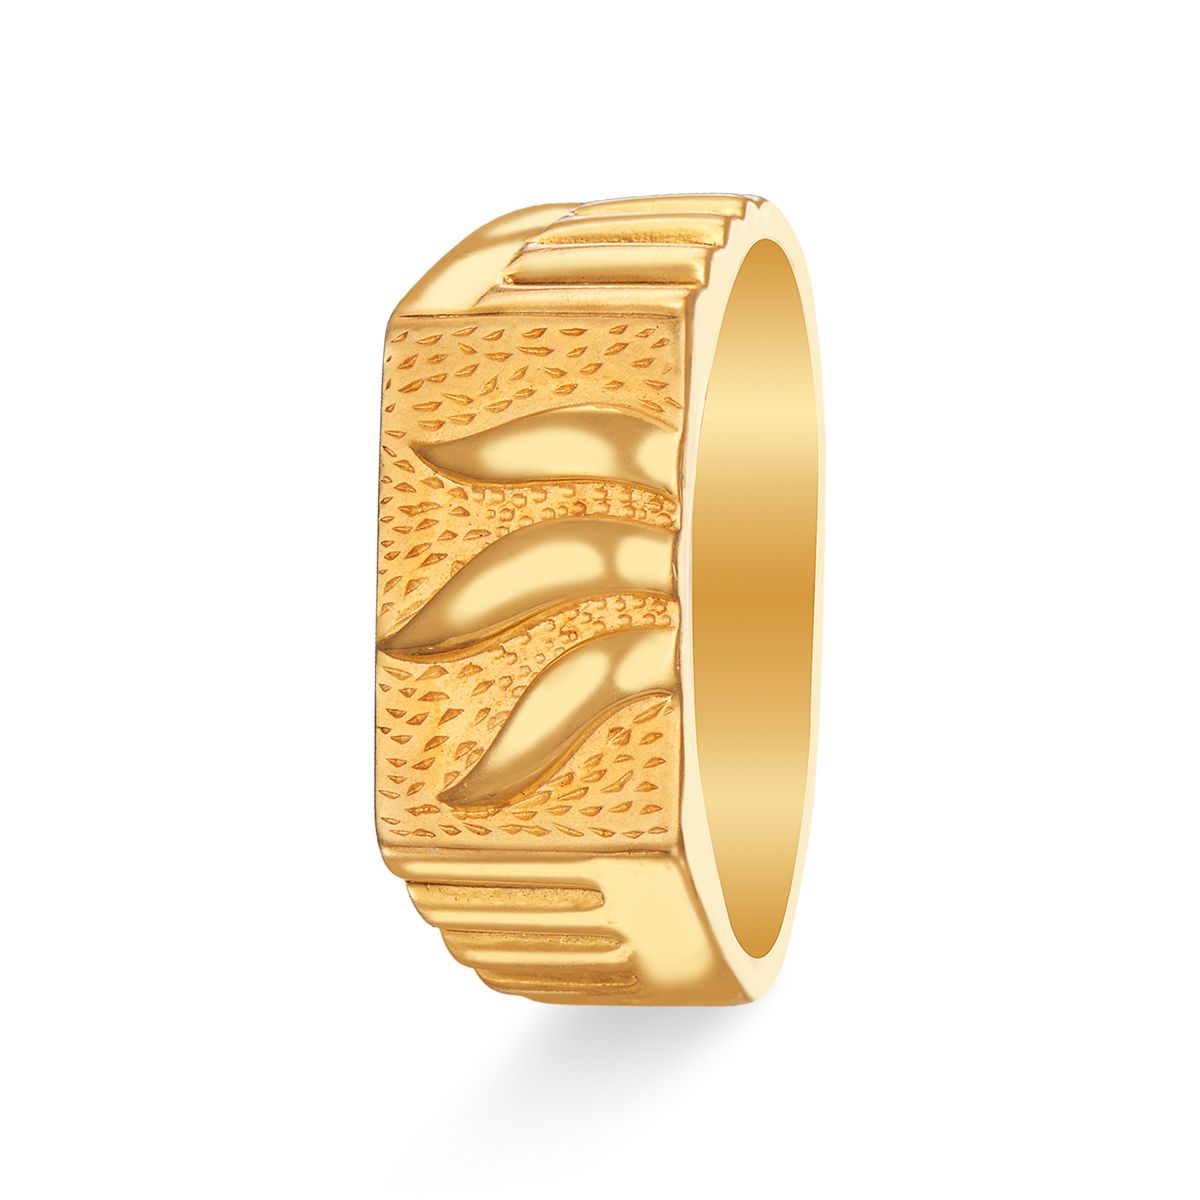 Buy Mens Gold Jewelry Online | Latest Men's Gold Jewelry Designs | Starkle